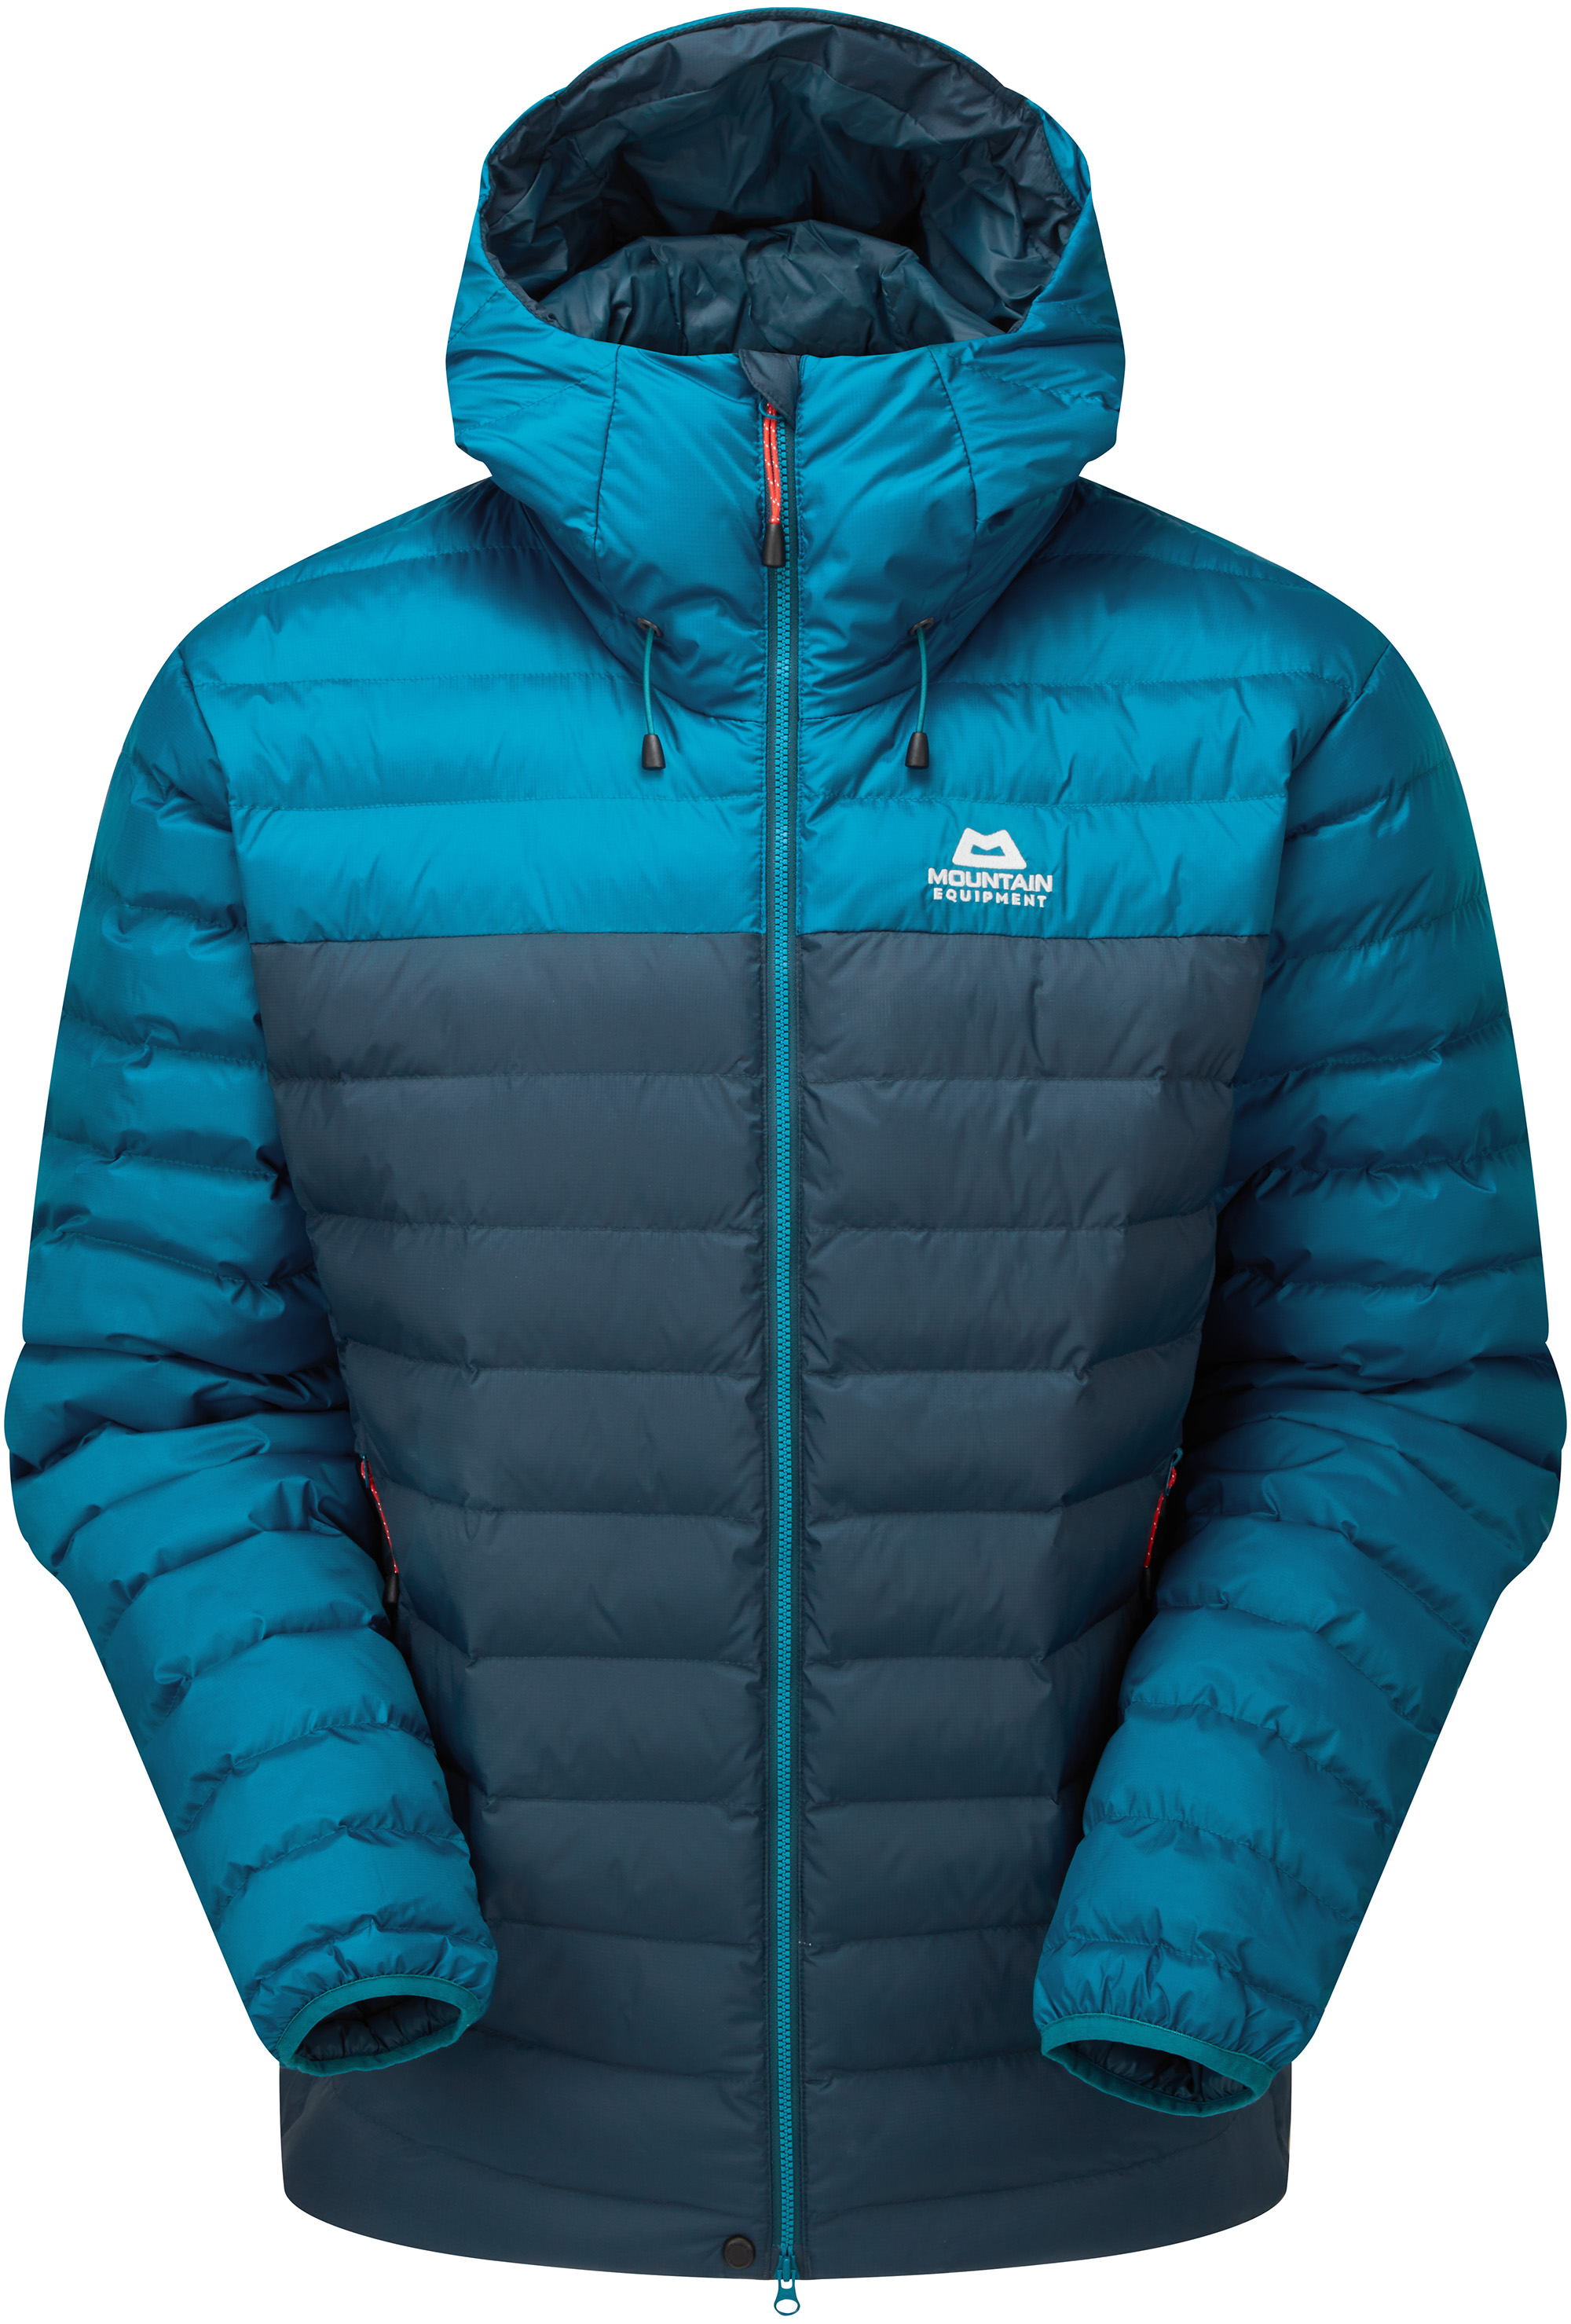 Mountain Equipment pánská zateplovací bunda Superflux Jacket Barva: Majolica/Mykonos, Velikost: L